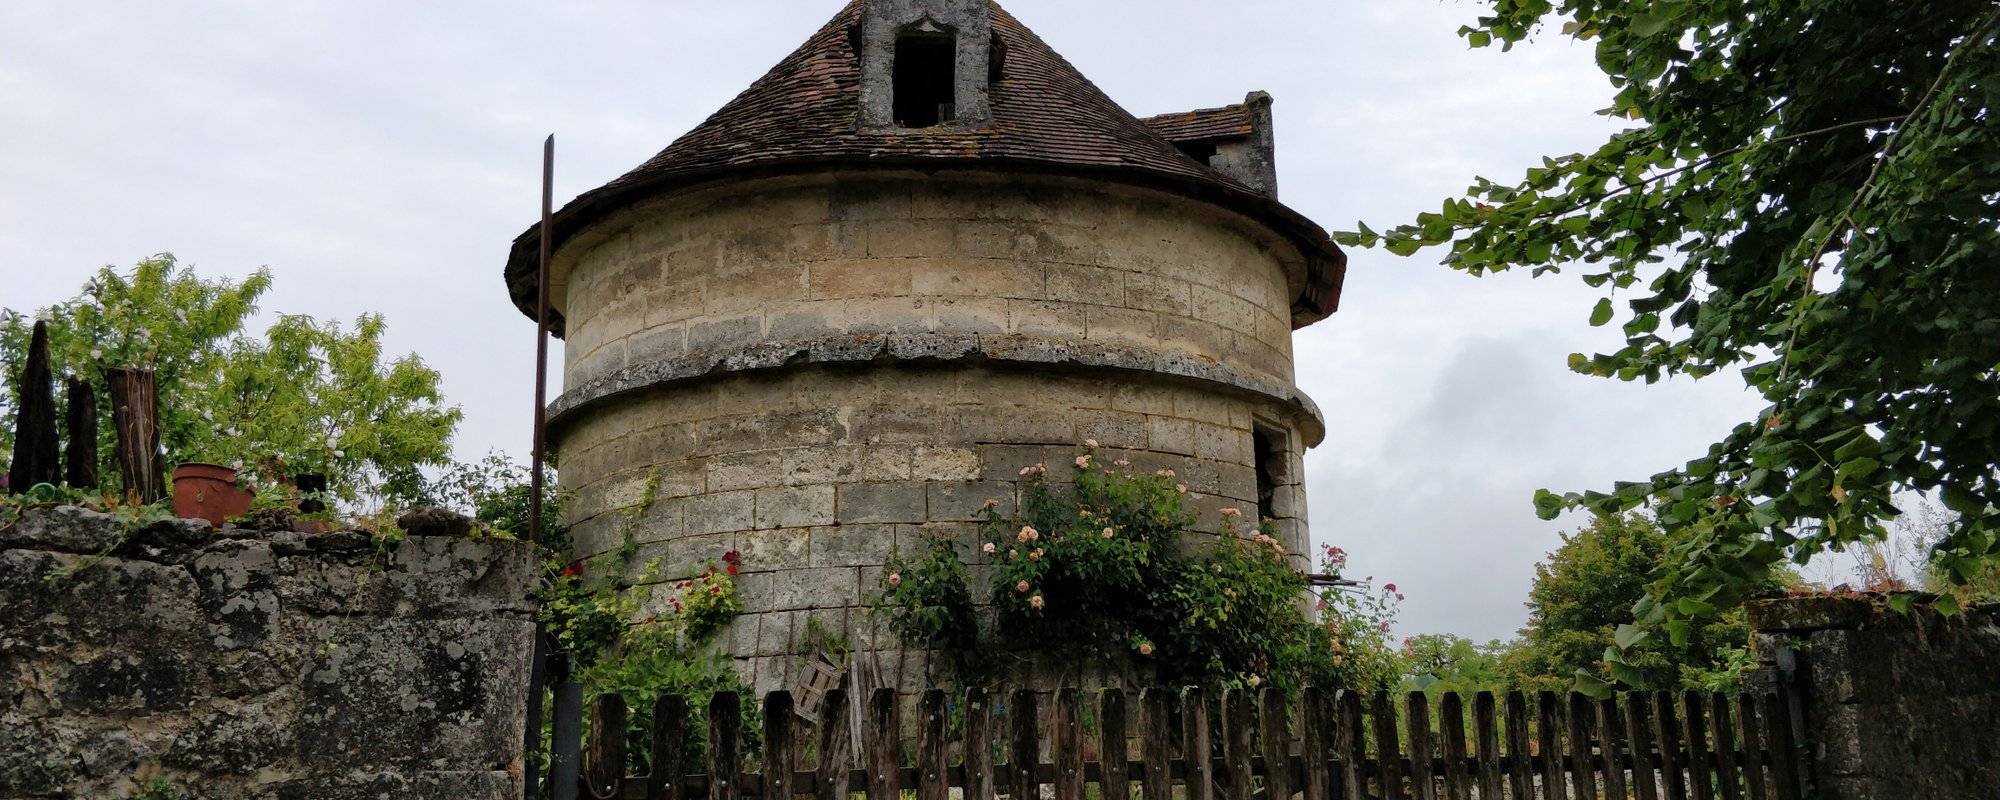 Dovecote (aka Pigeon House): La Tours-Blanche FRANCE